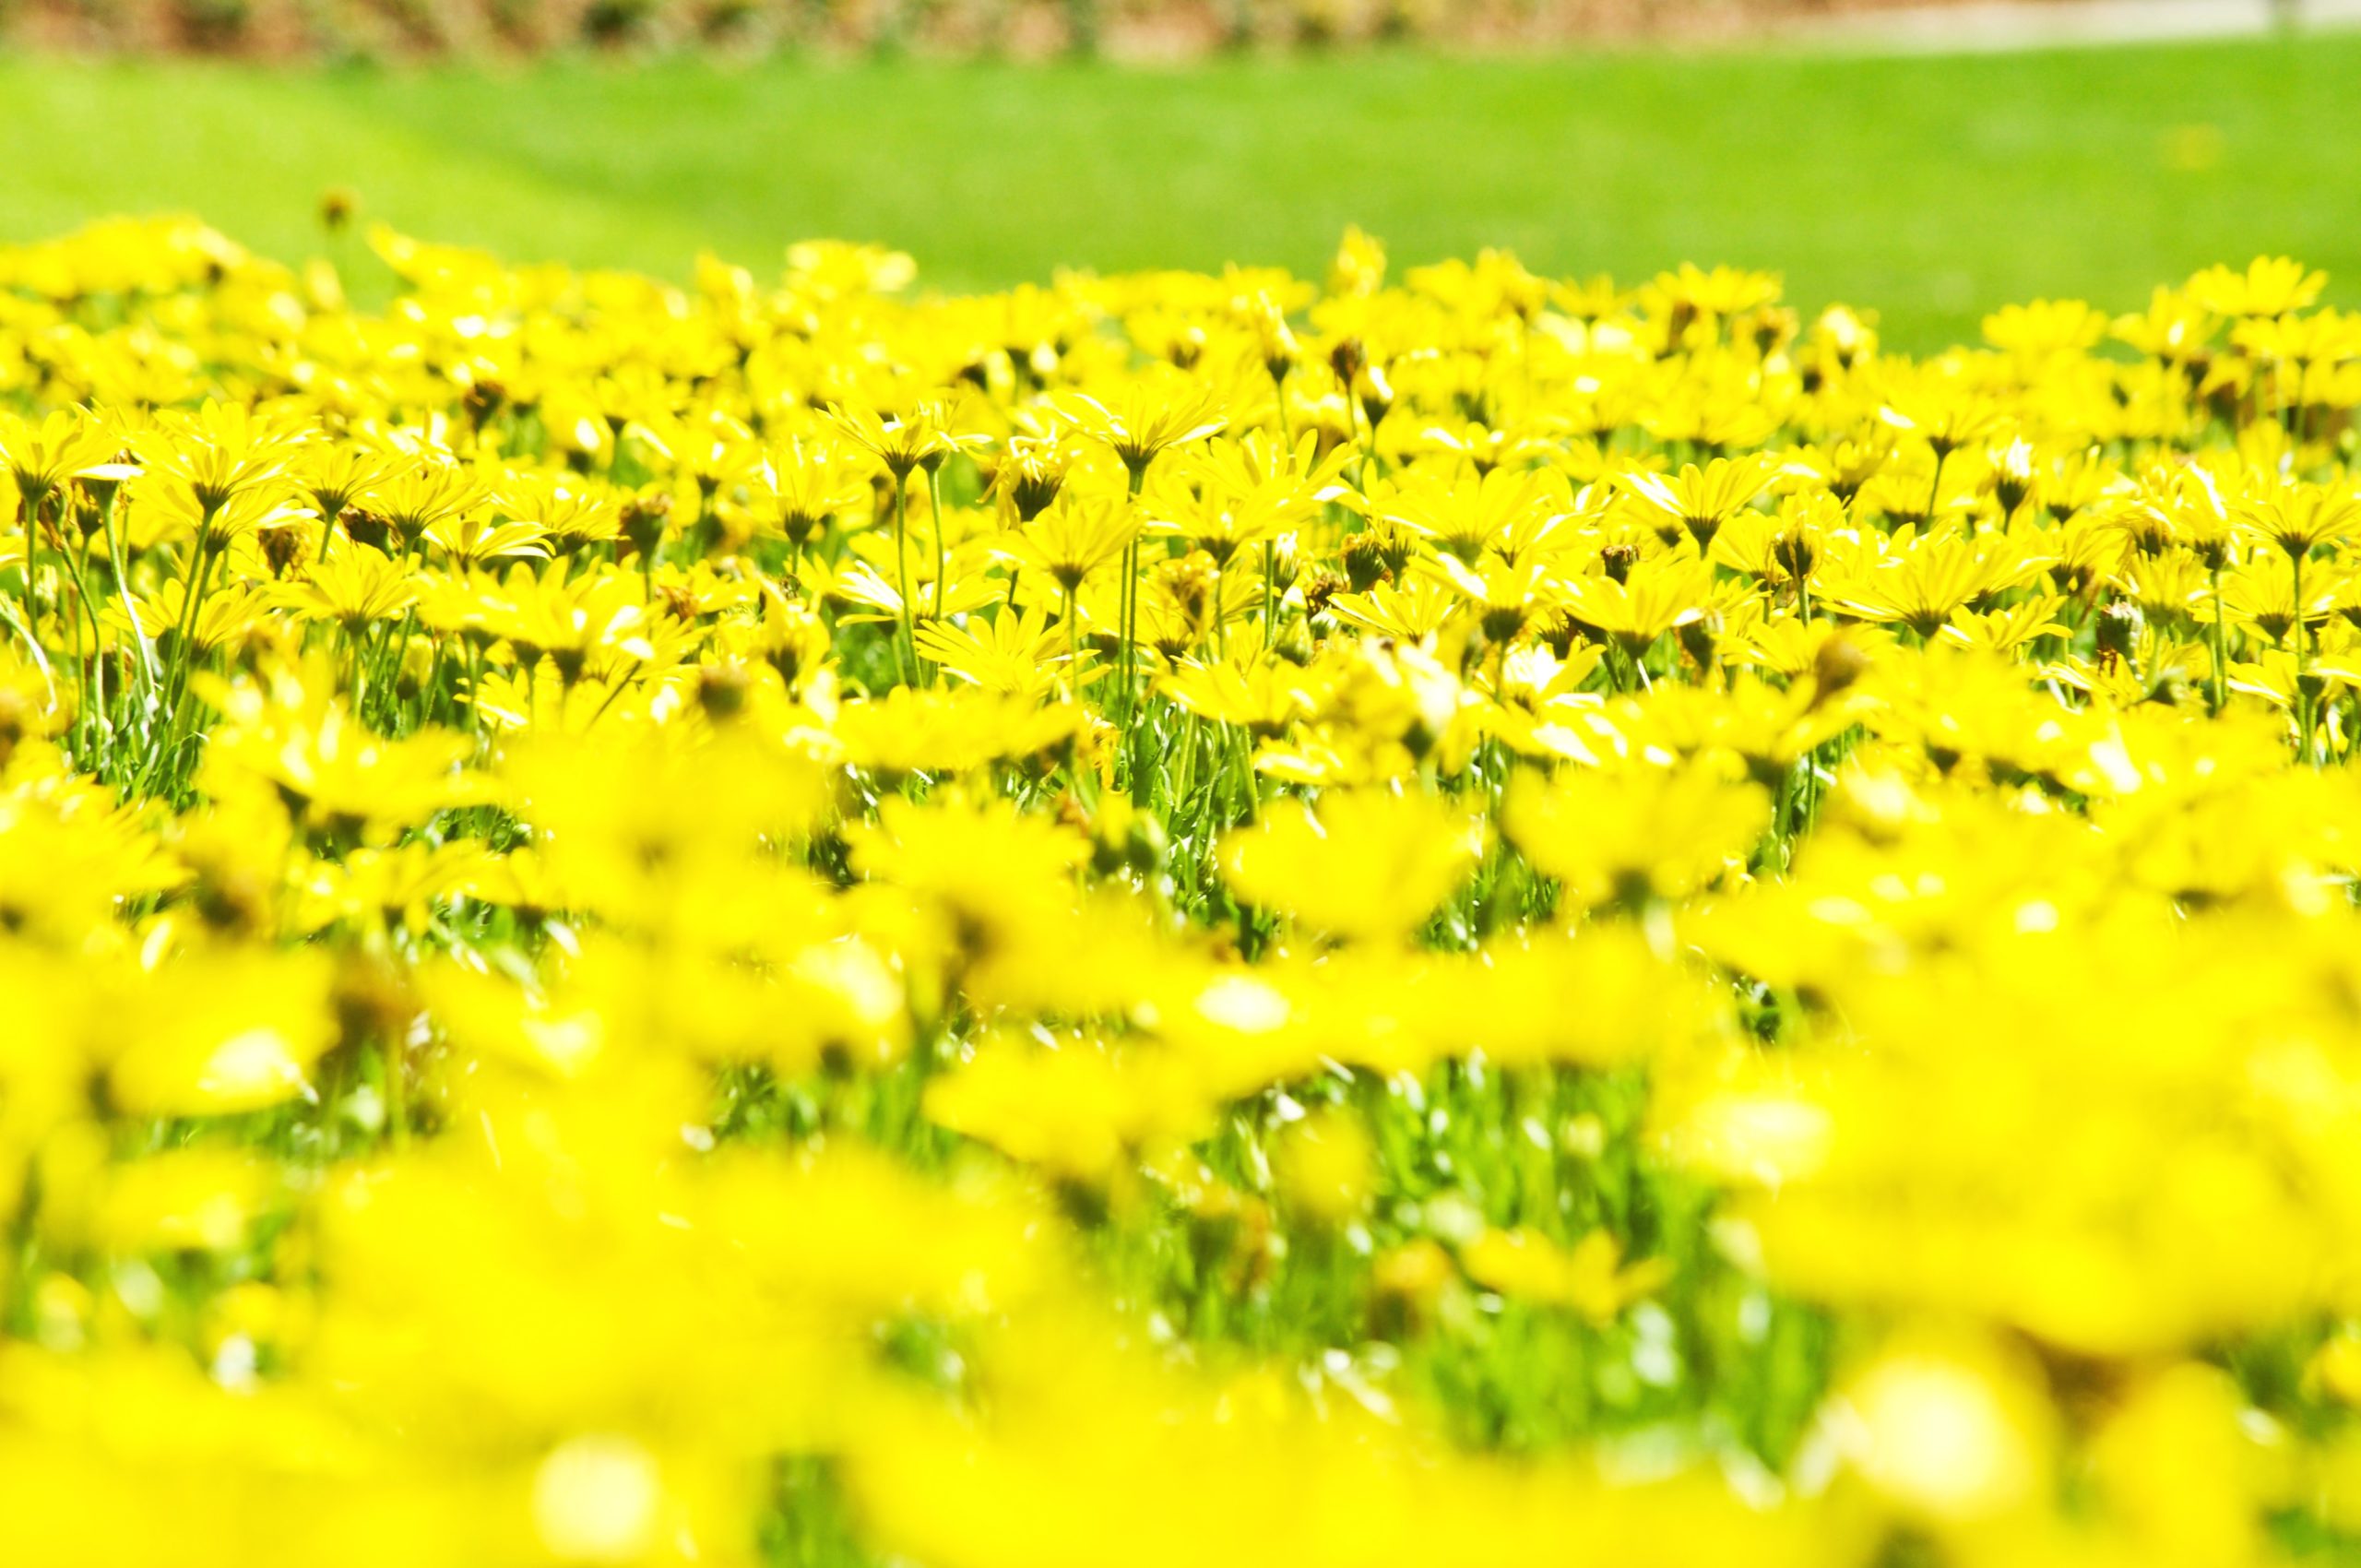 <img src="garden.jpg" alt="garden with yellow daises"/> 